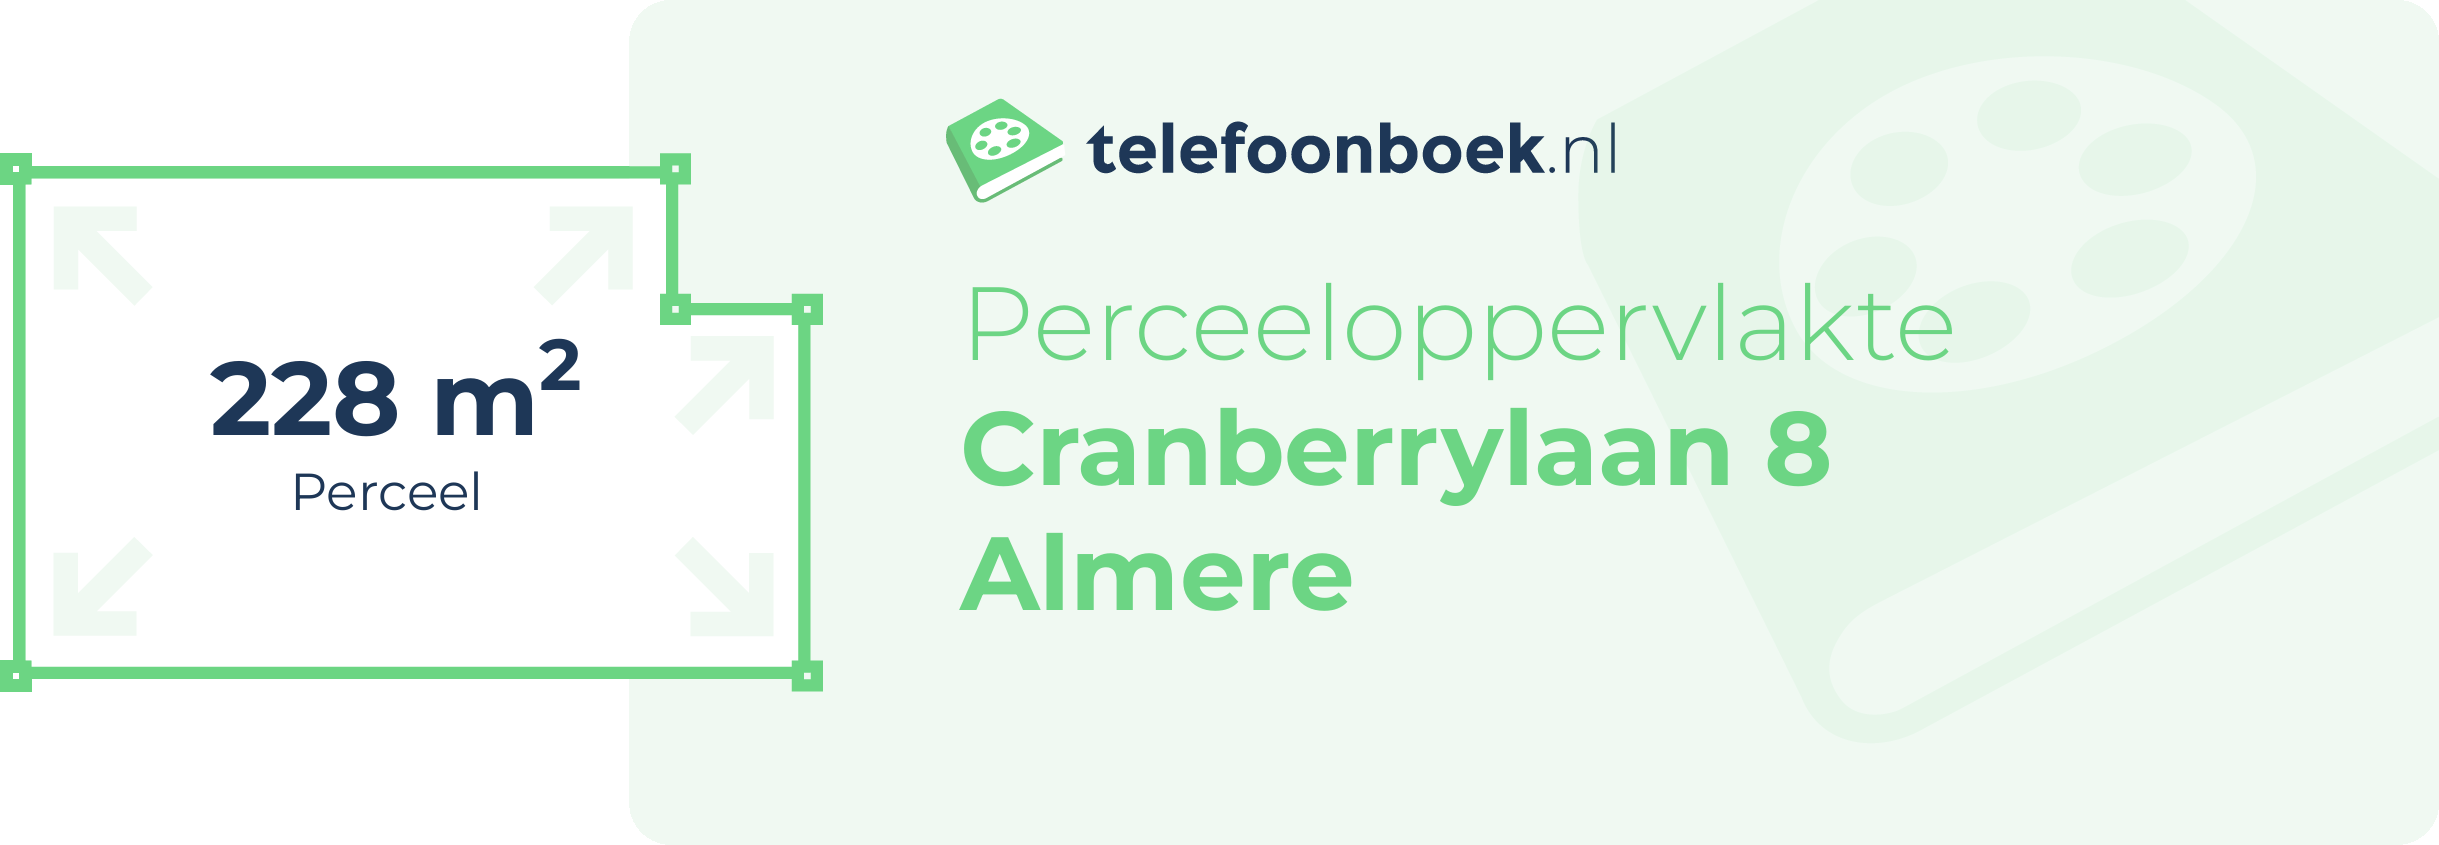 Perceeloppervlakte Cranberrylaan 8 Almere